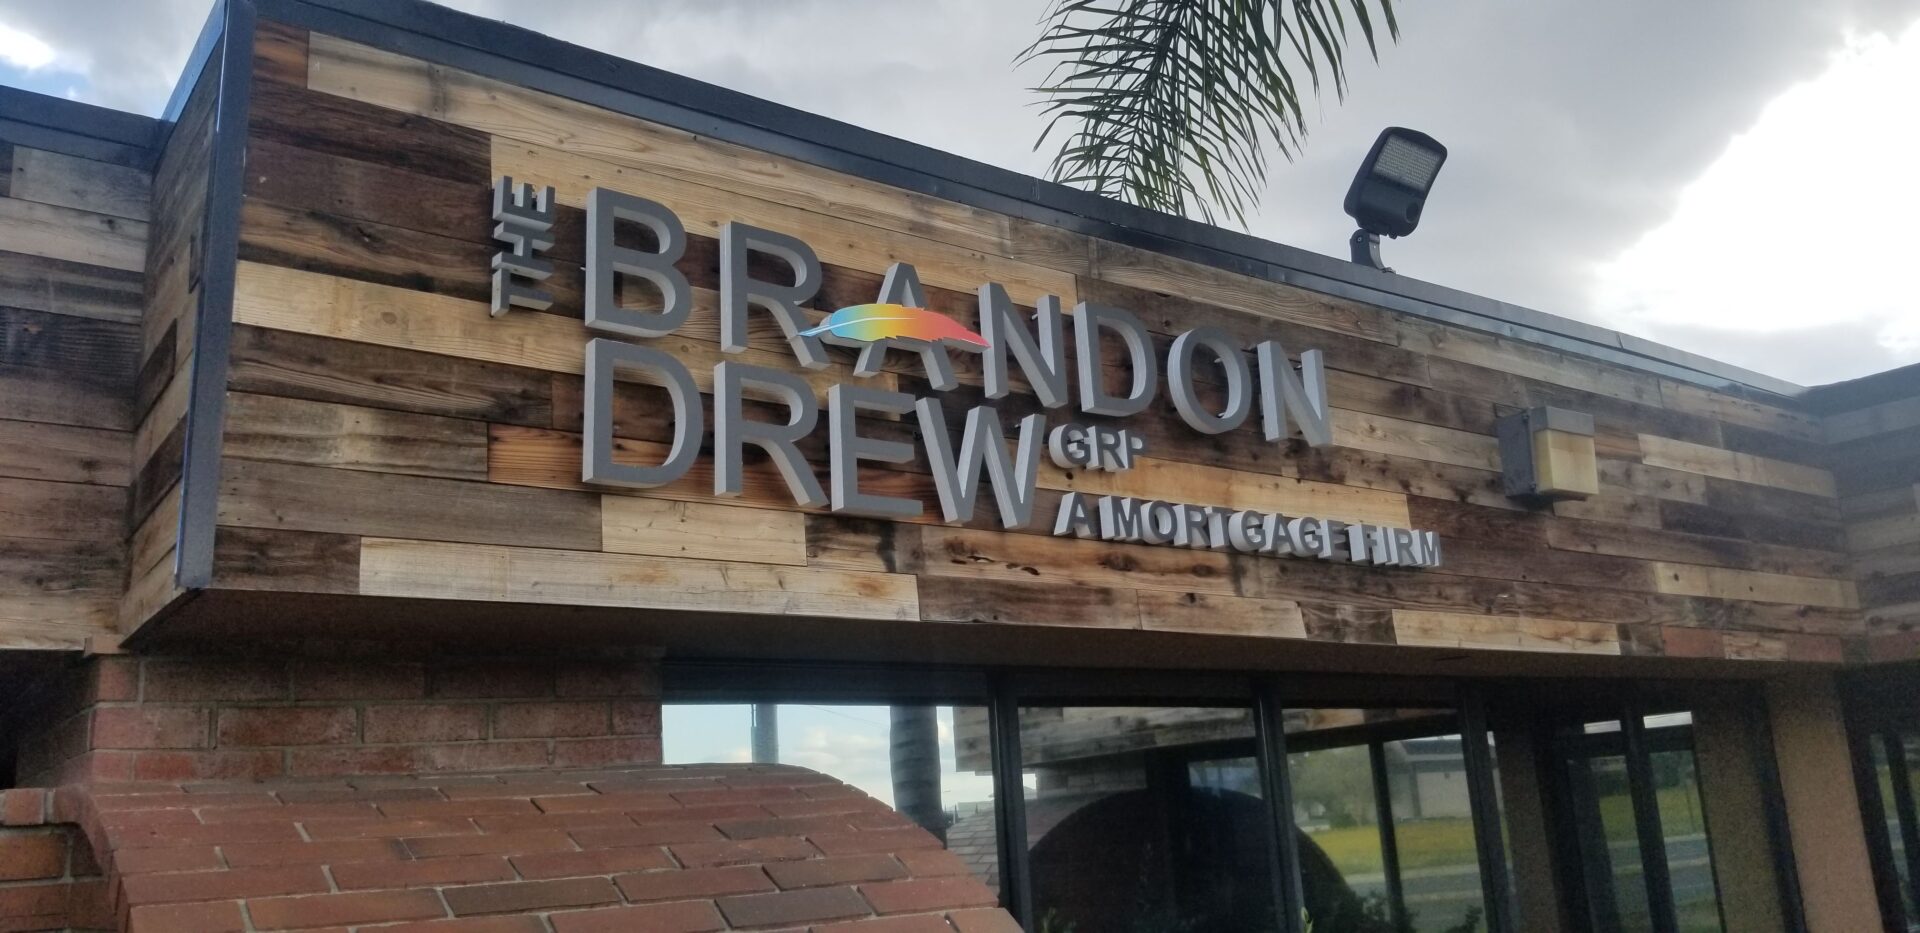 Embossed grey signage of The Brandon Drew Grp